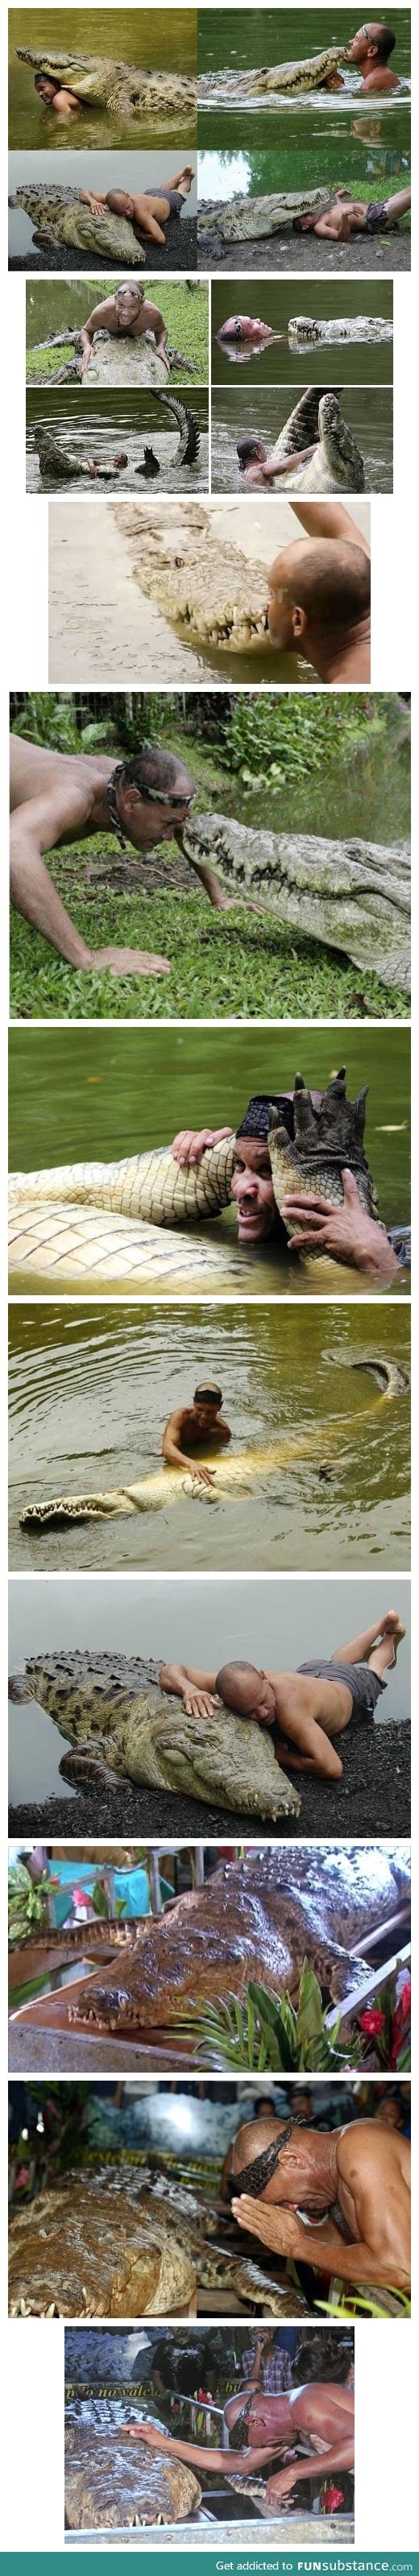 Poncho the friendly crocodile